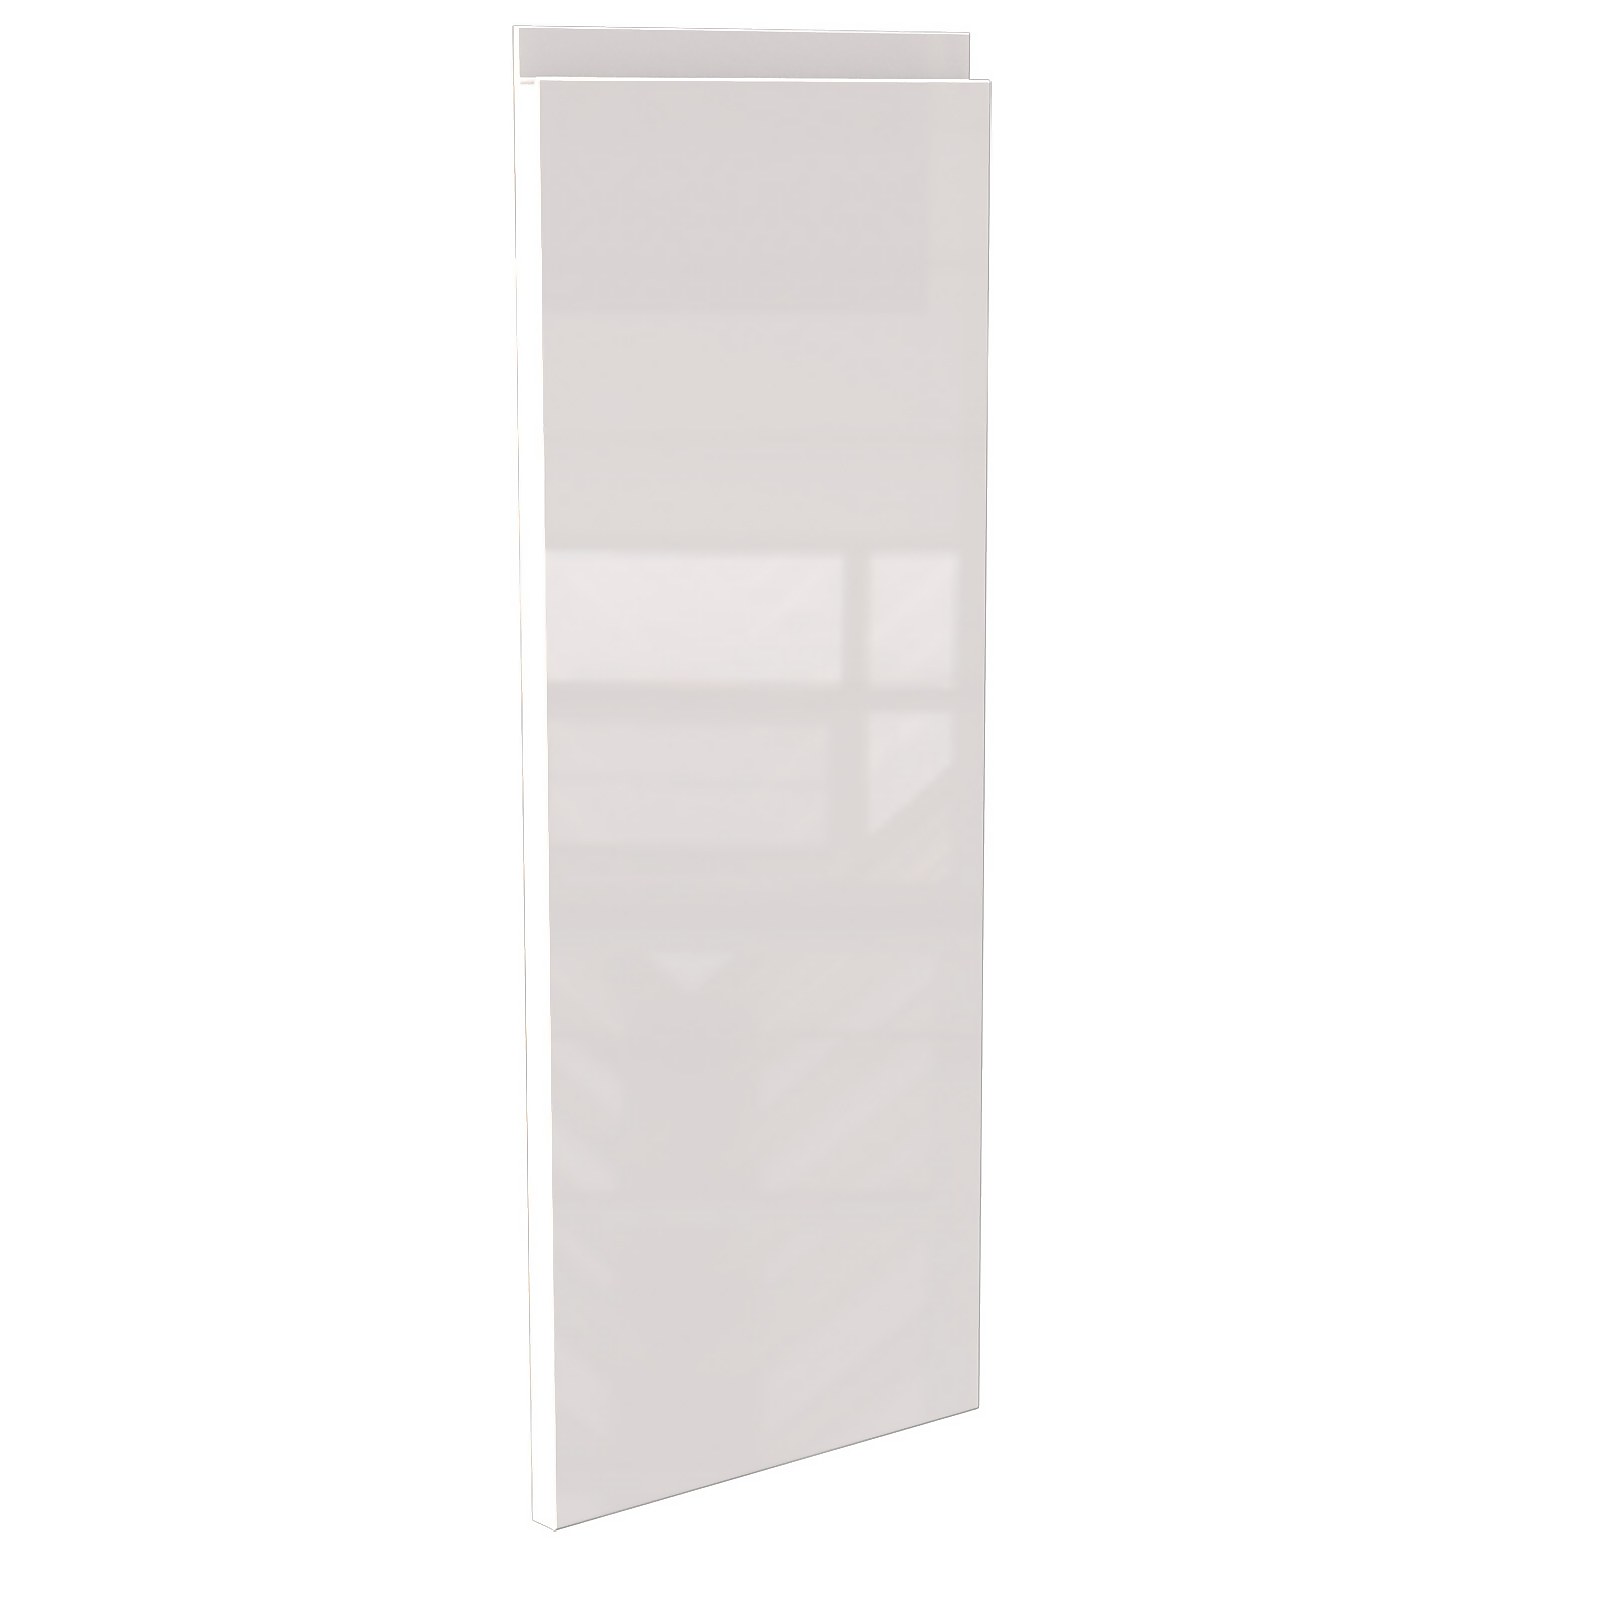 Handleless Kitchen Cabinet Door (W)297mm - Gloss White